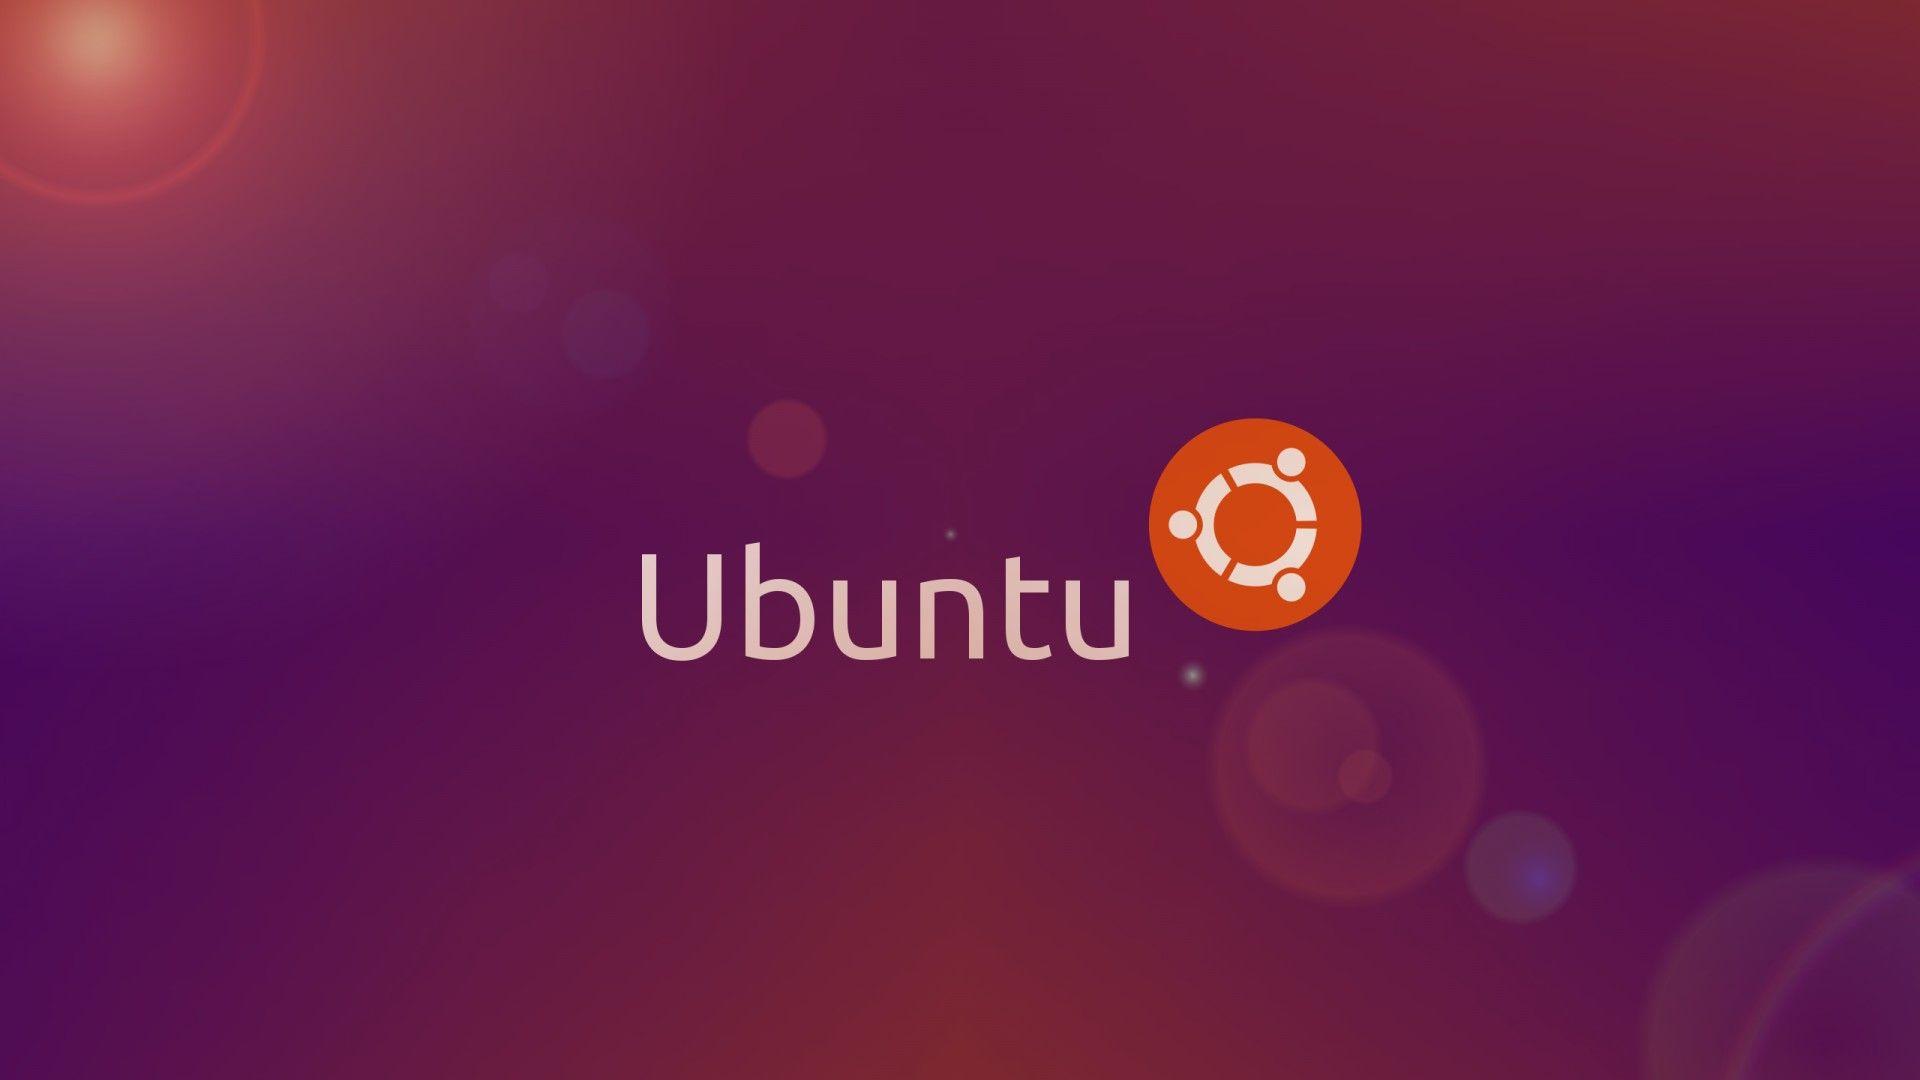 desktops for ubuntu